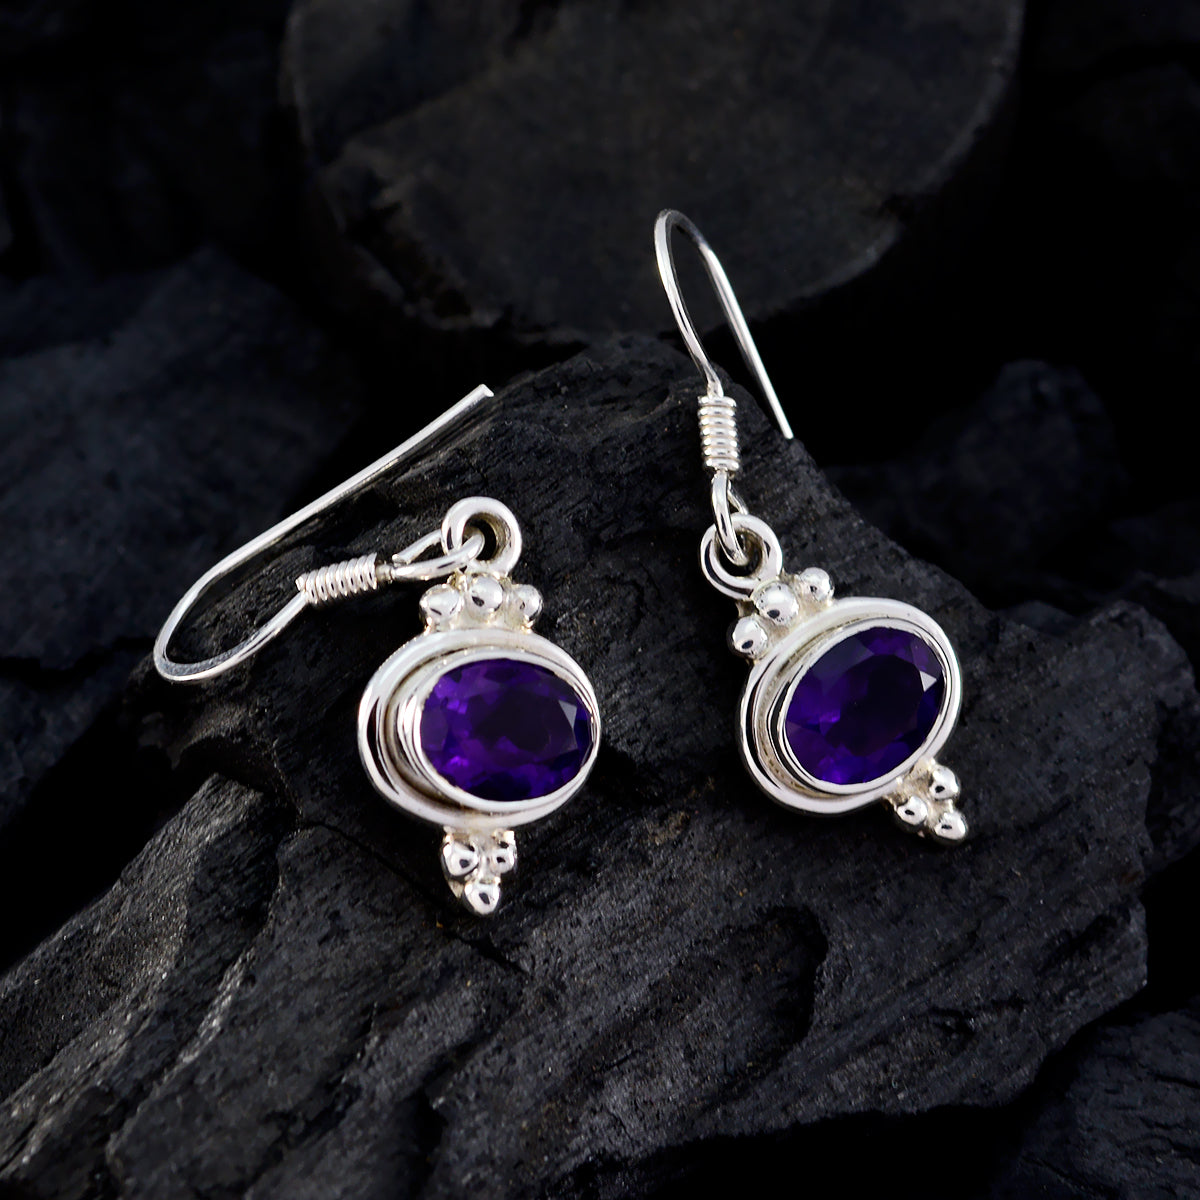 Riyo Genuine Gems oval Faceted Purple Amethyst Silver Earrings graduation gift